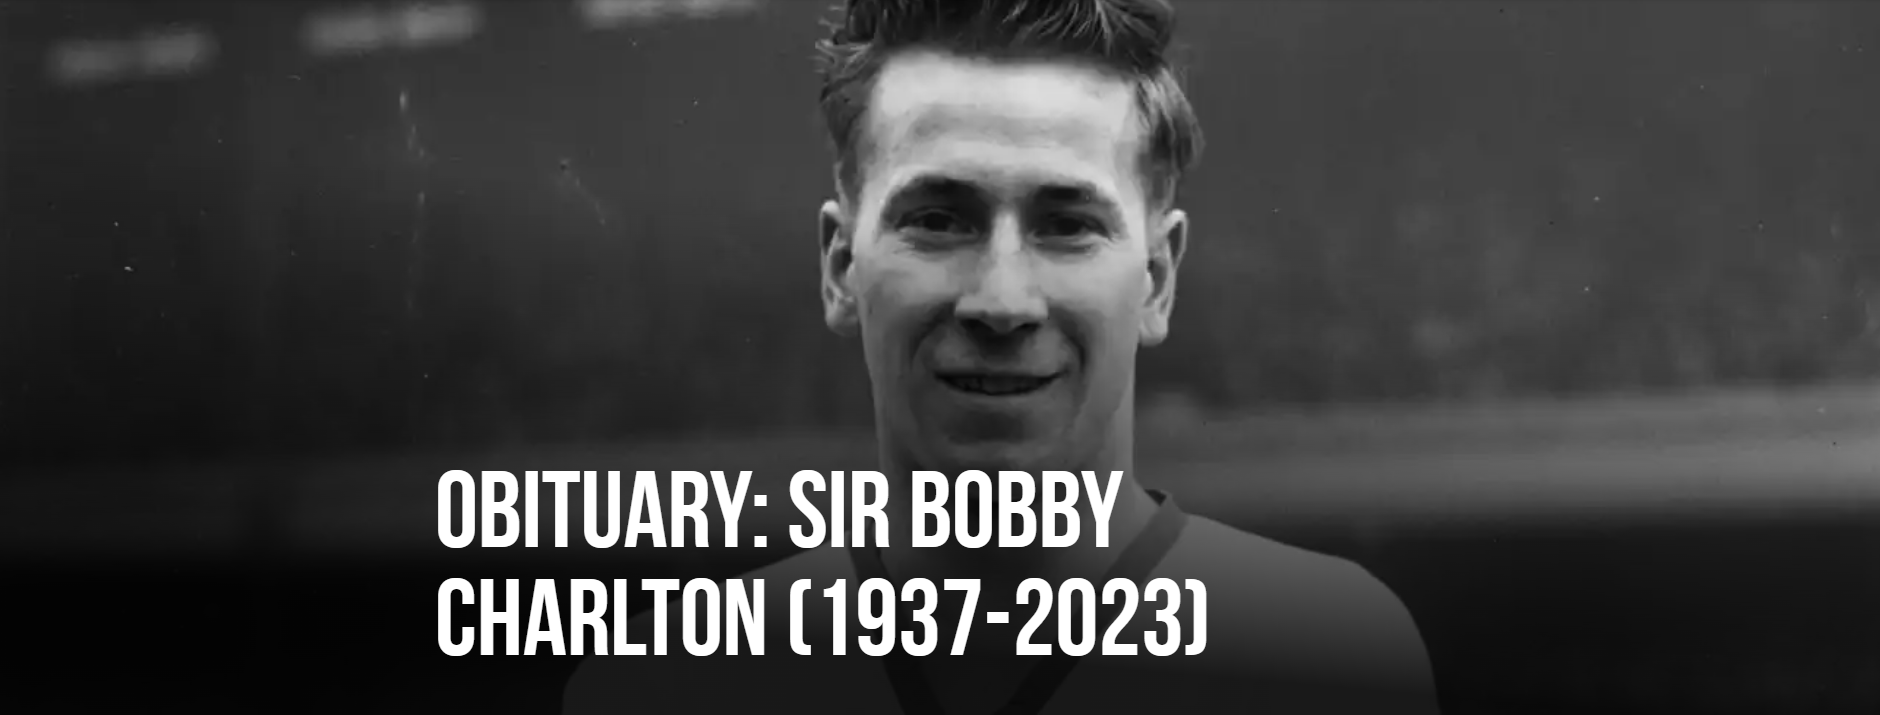 In Memoriam: Sir Bobby Charlton (1937-2023)